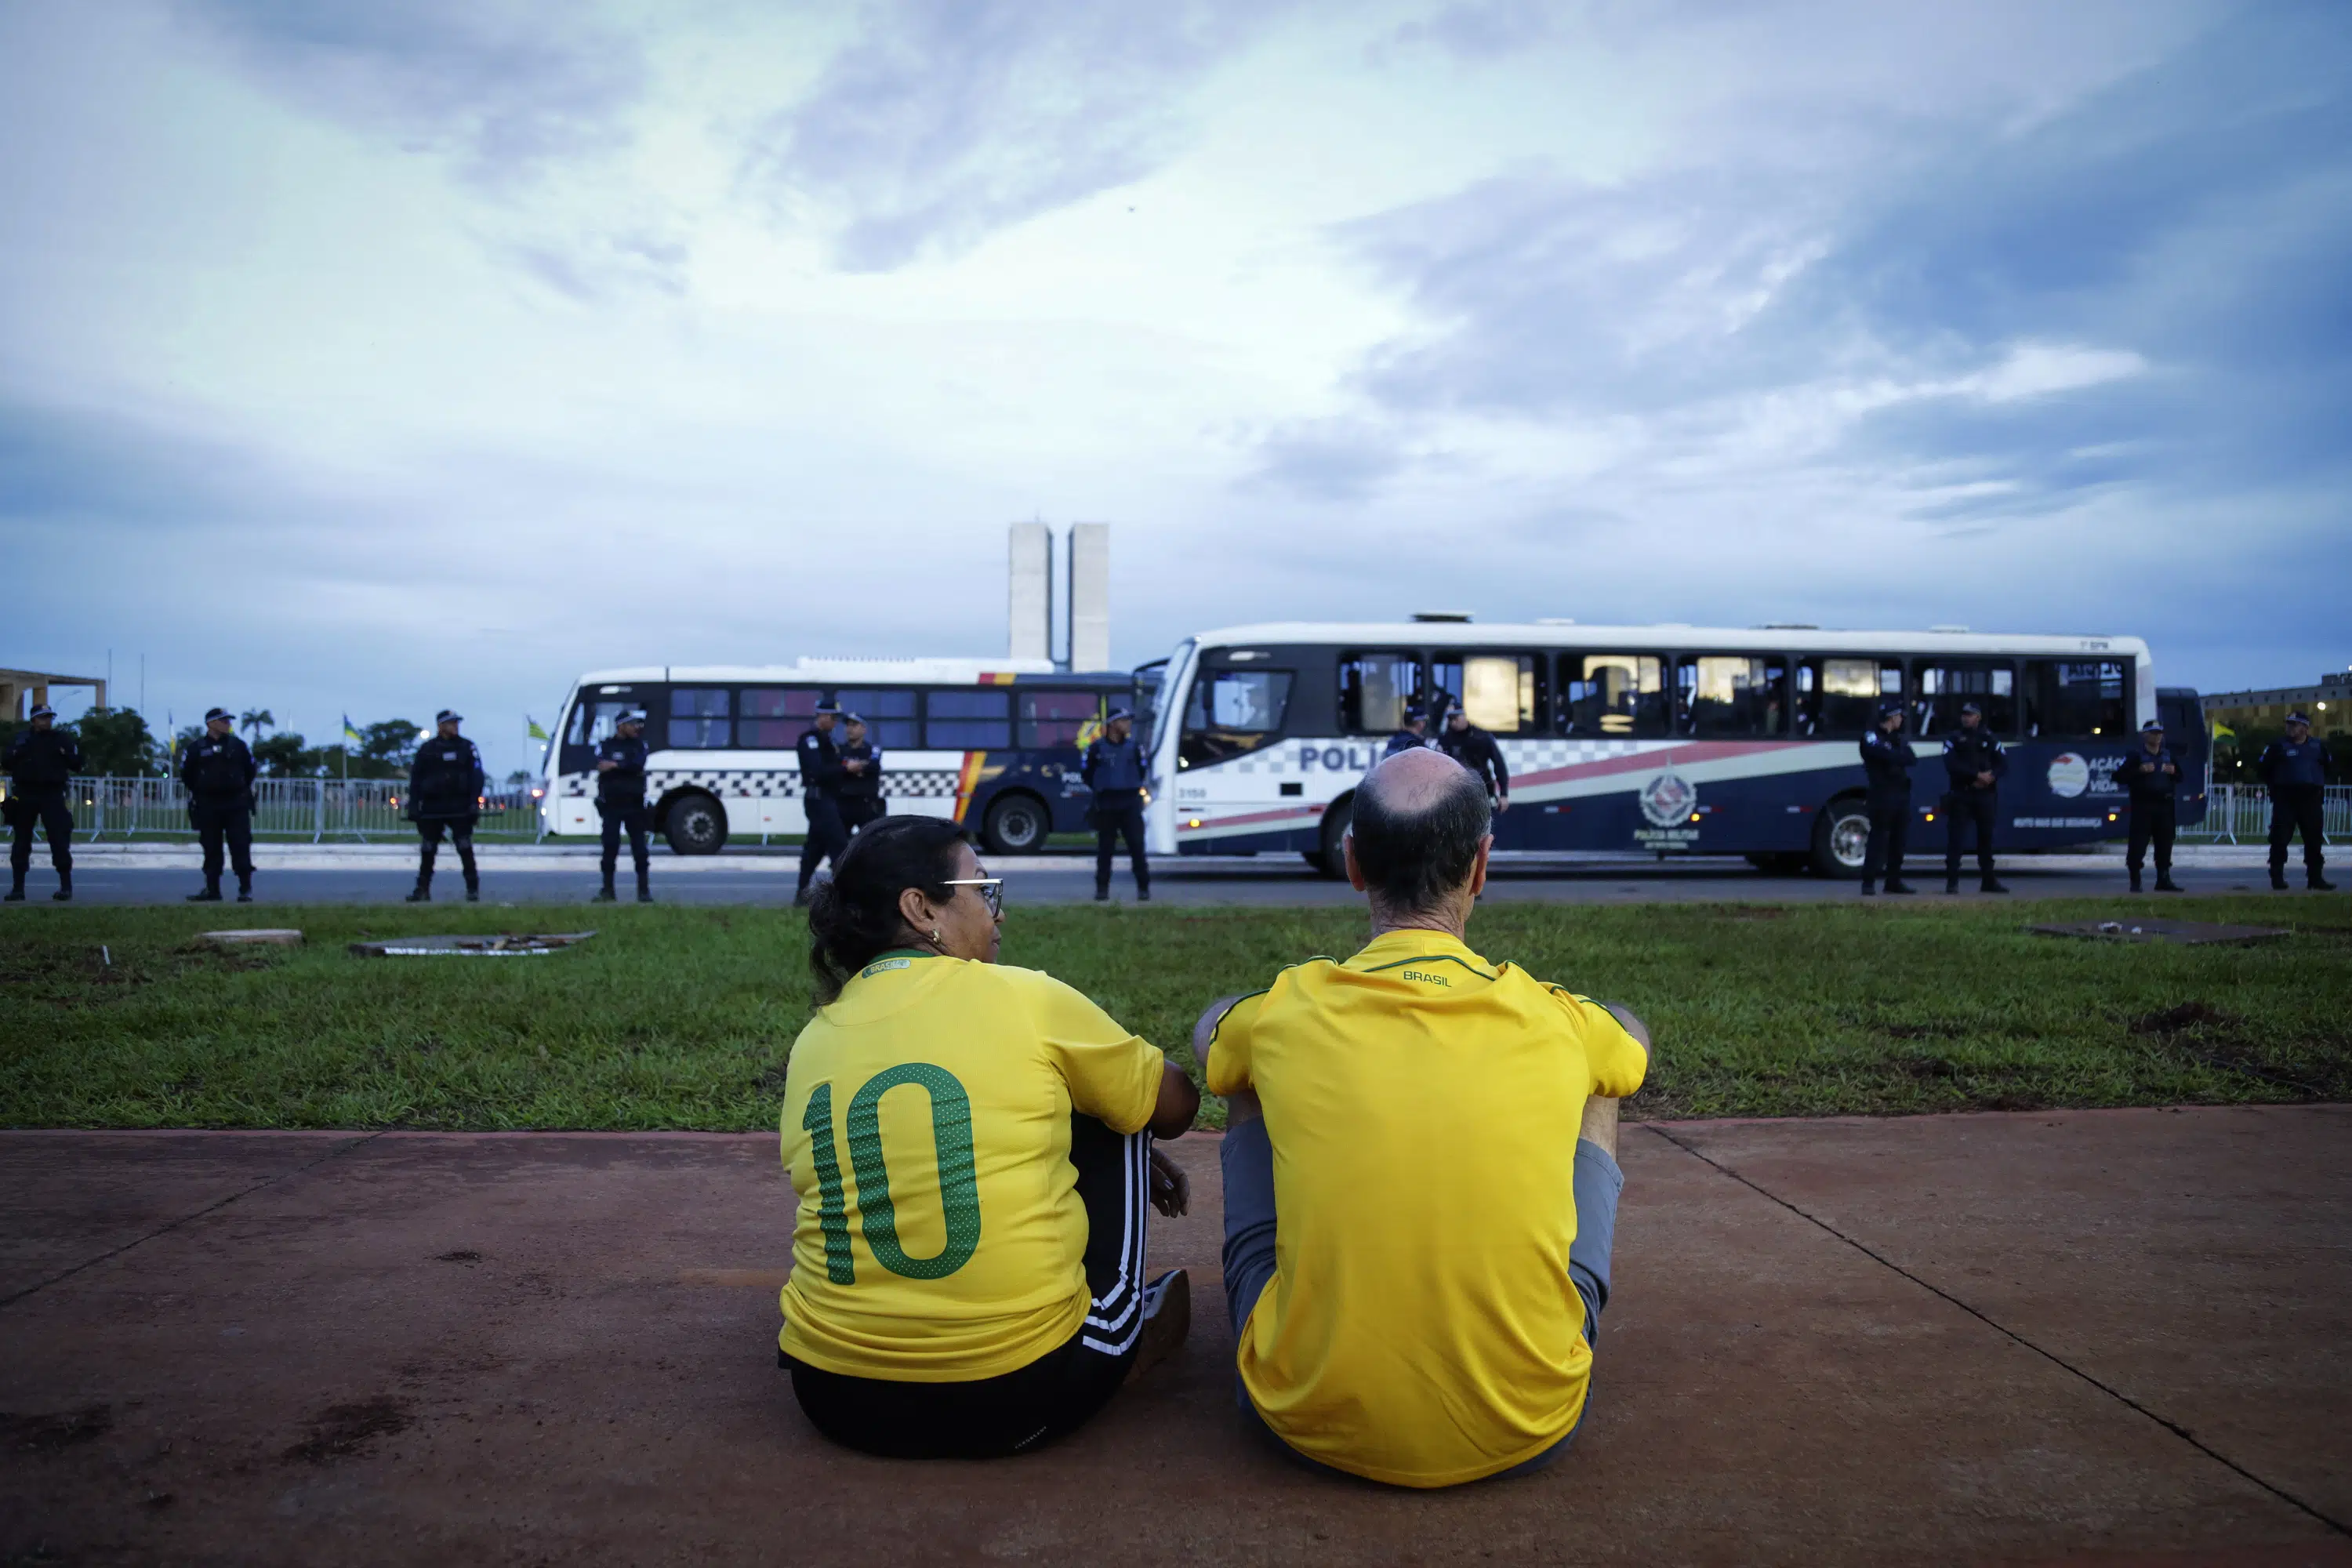 Brazil 'mega-protest' fizzles amid authorities' concern